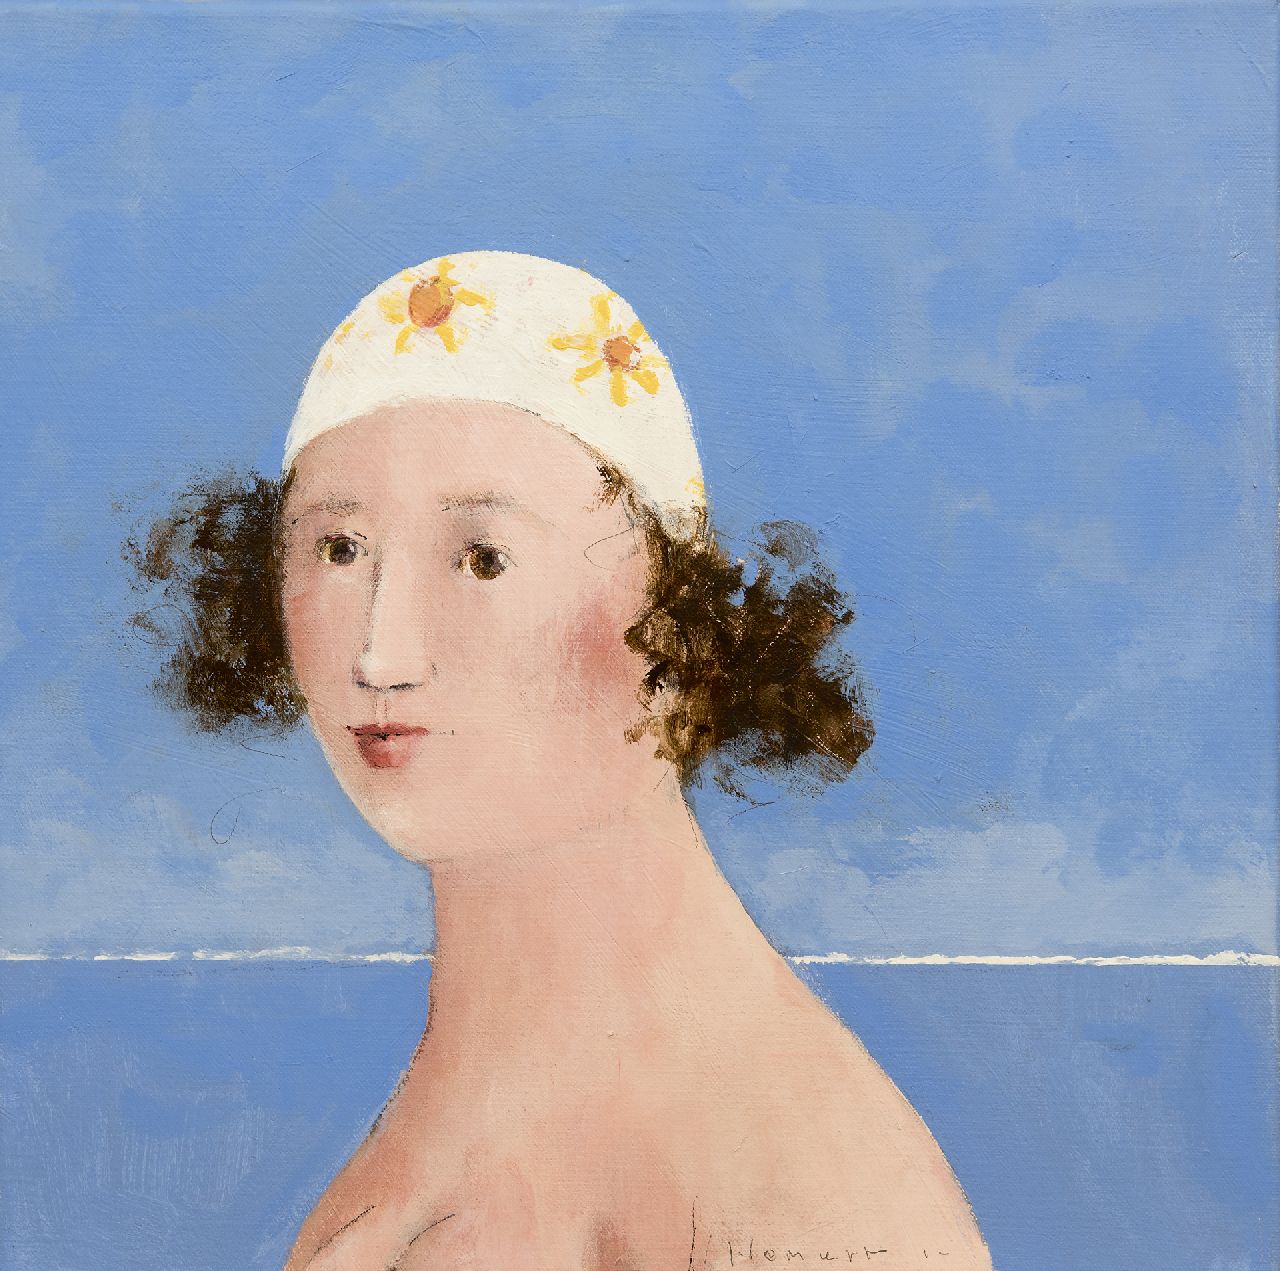 Hemert E. van | Evert van Hemert, The bathing cap, acrylic on canvas 40.0 x 40.0 cm, signed l.r. and dated '12